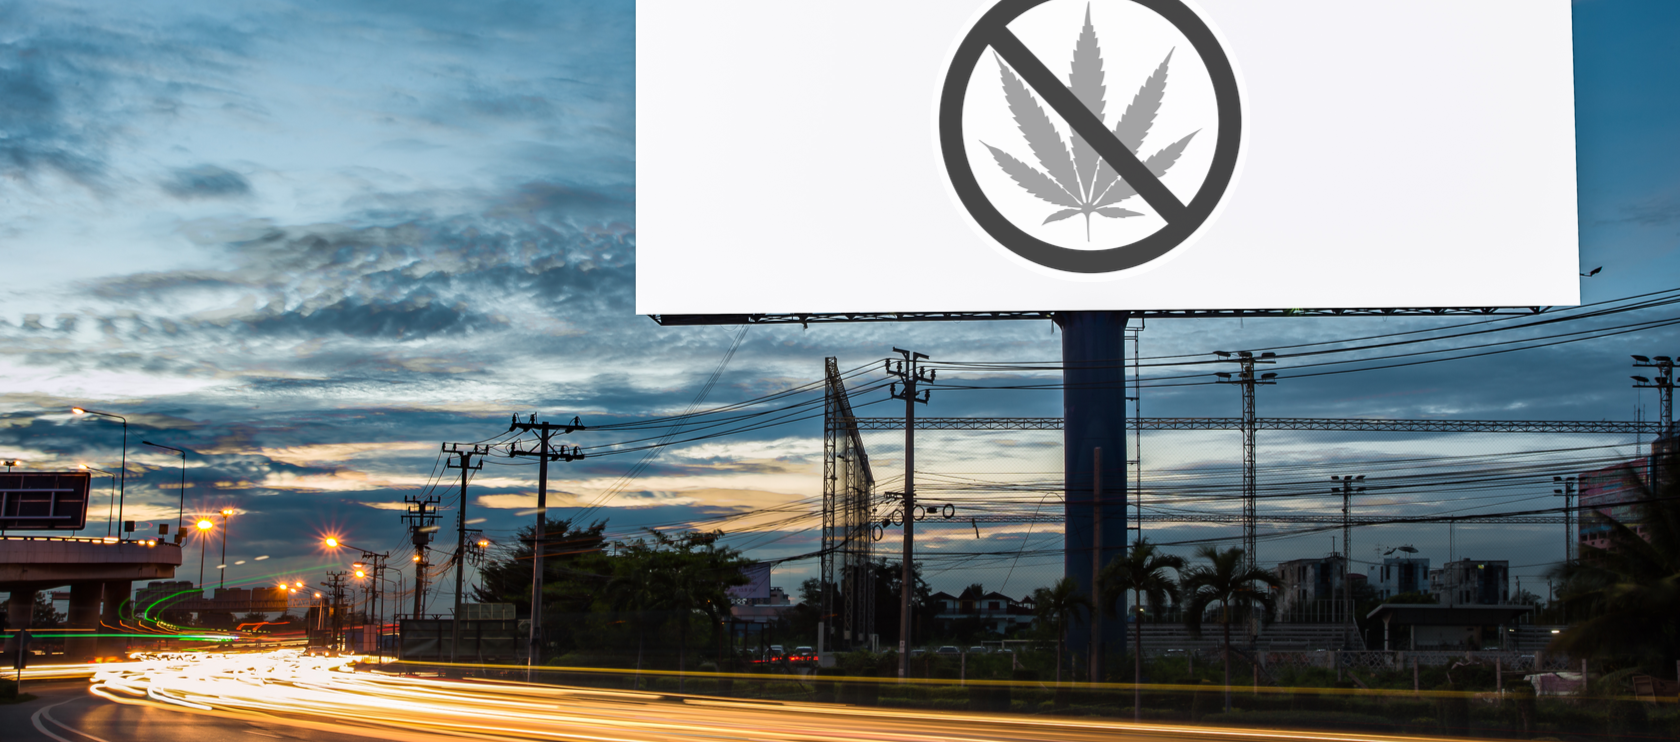 Cannabis billboard advertising